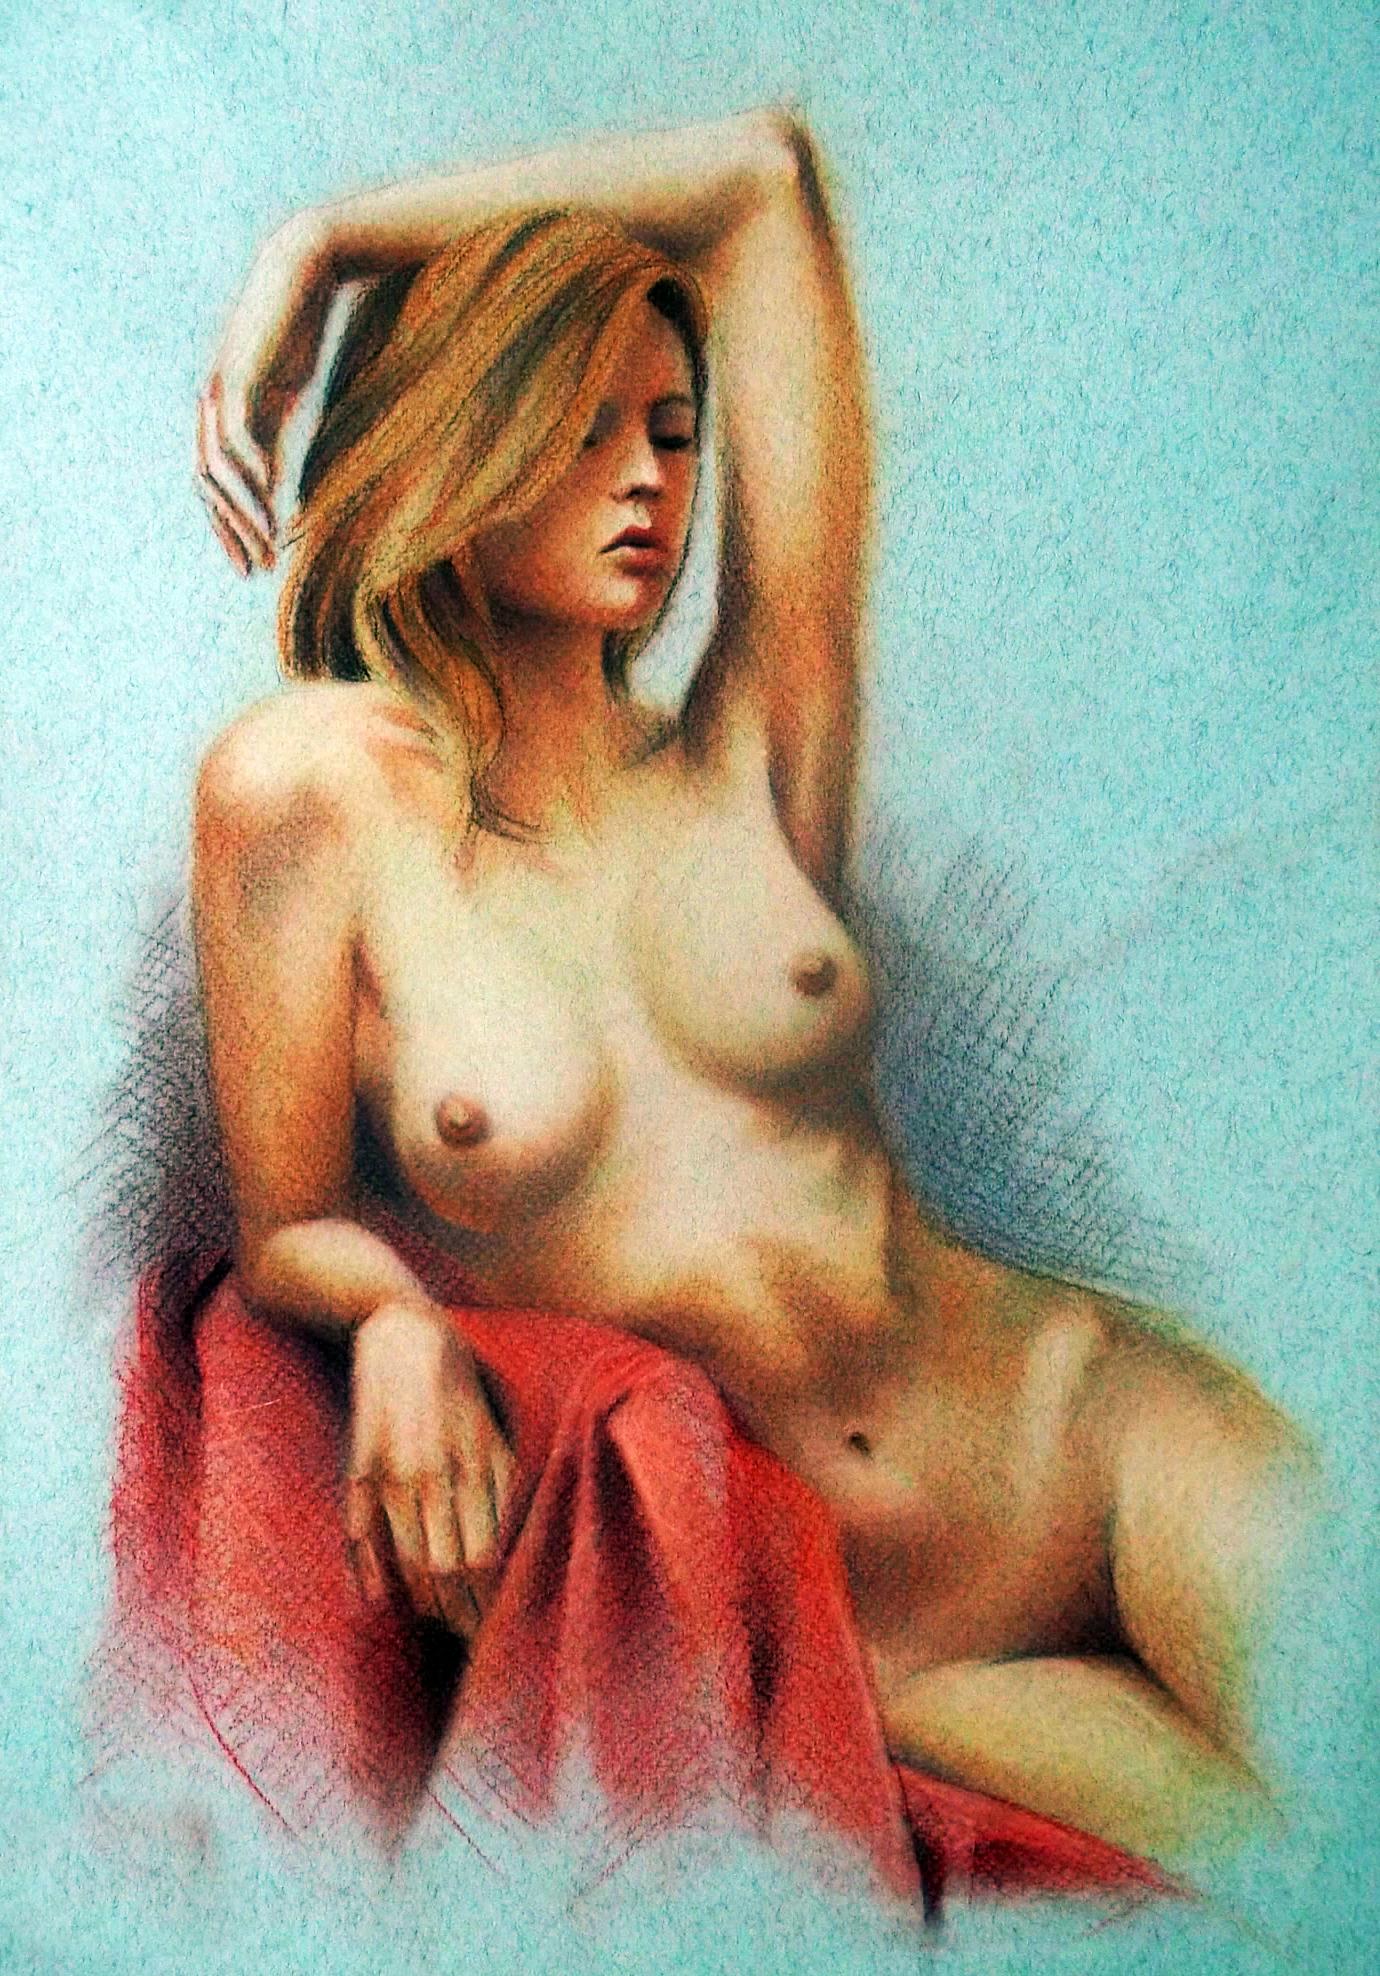 Jessica by Serhii Melnikov